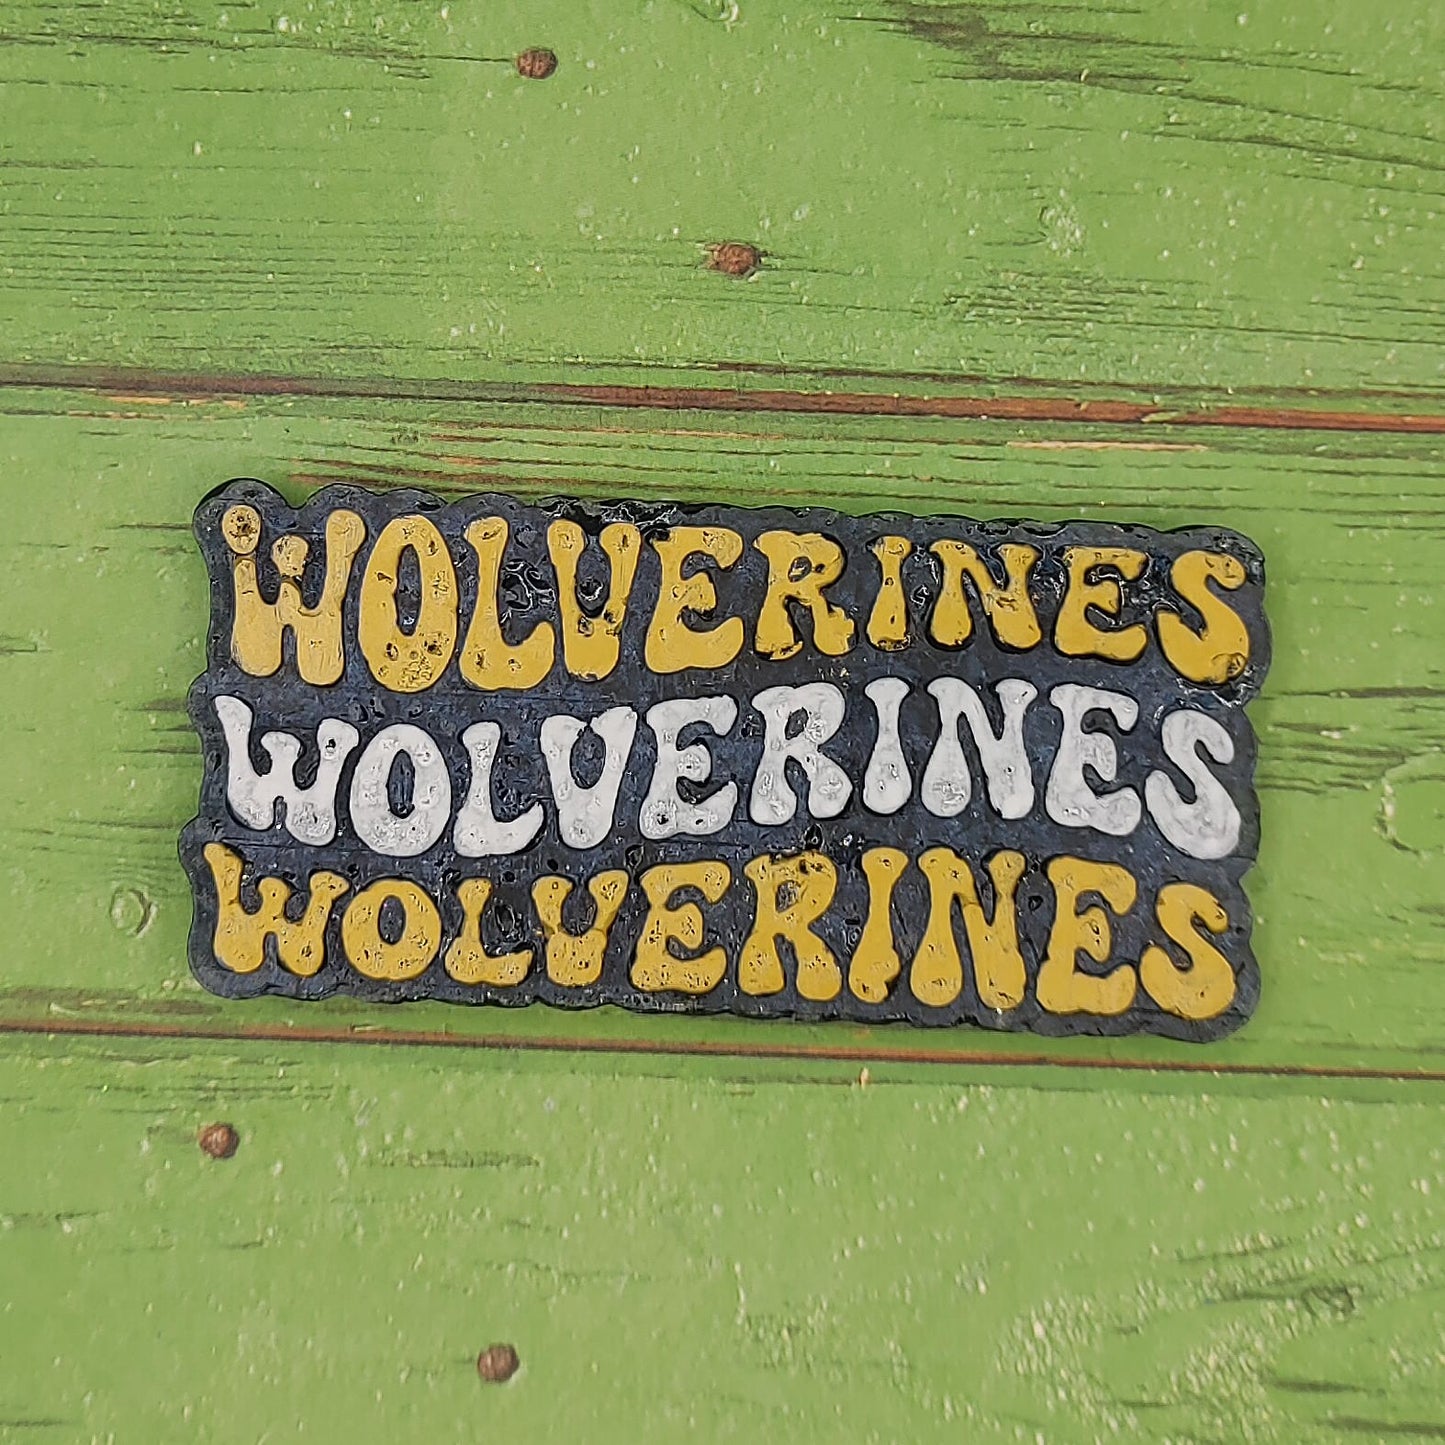 Wolverines Wolverines Wolverines - Retro Font - Silicone Freshie Mold